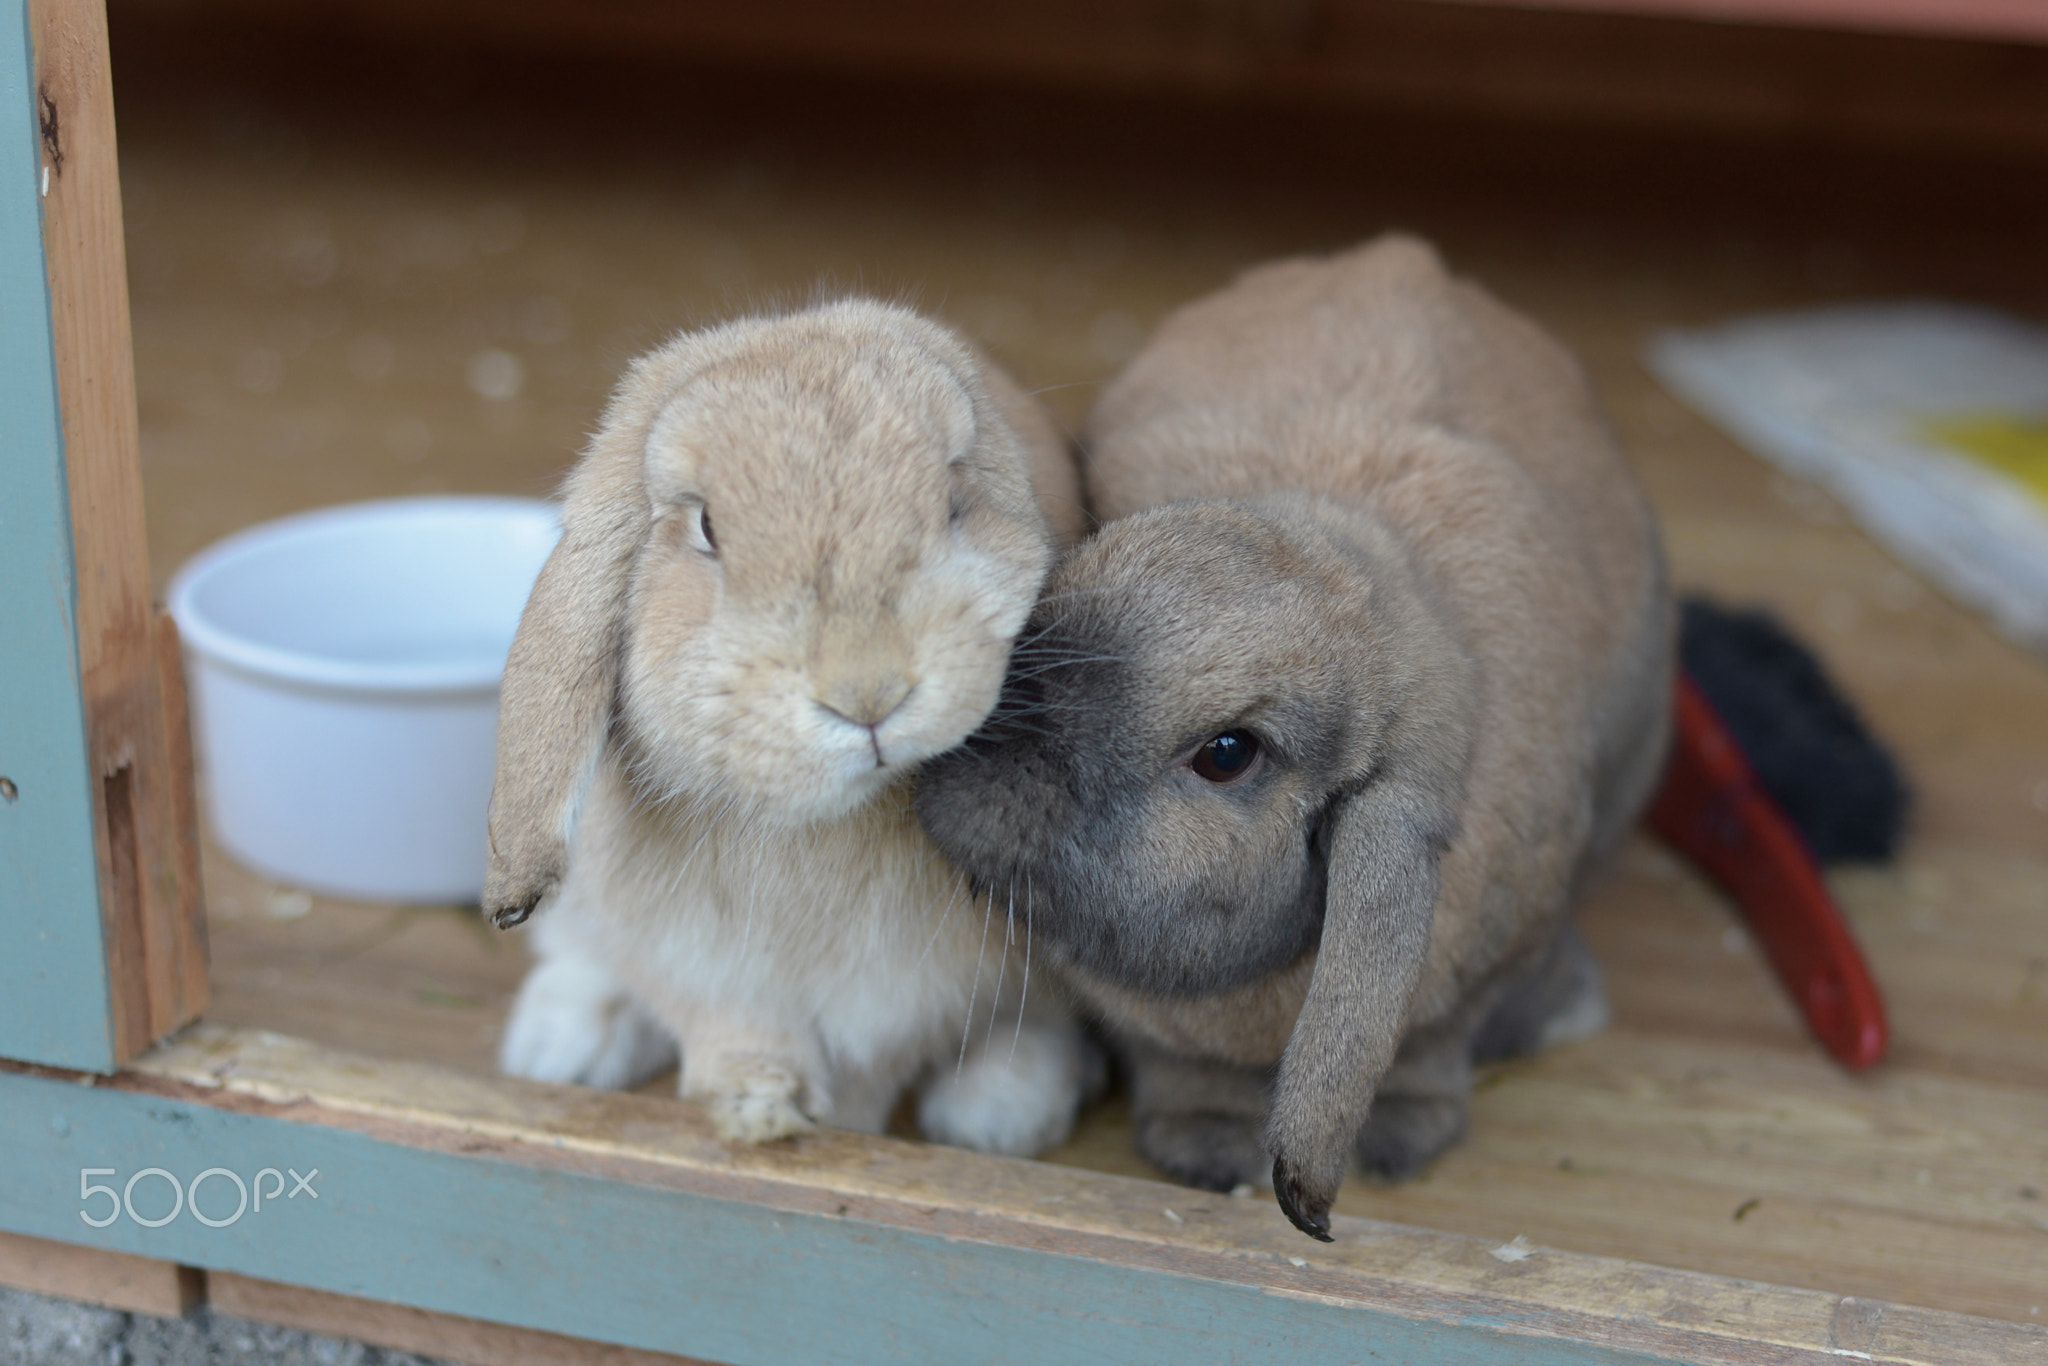 Two dwarf lop rabbits show affectionate nudge